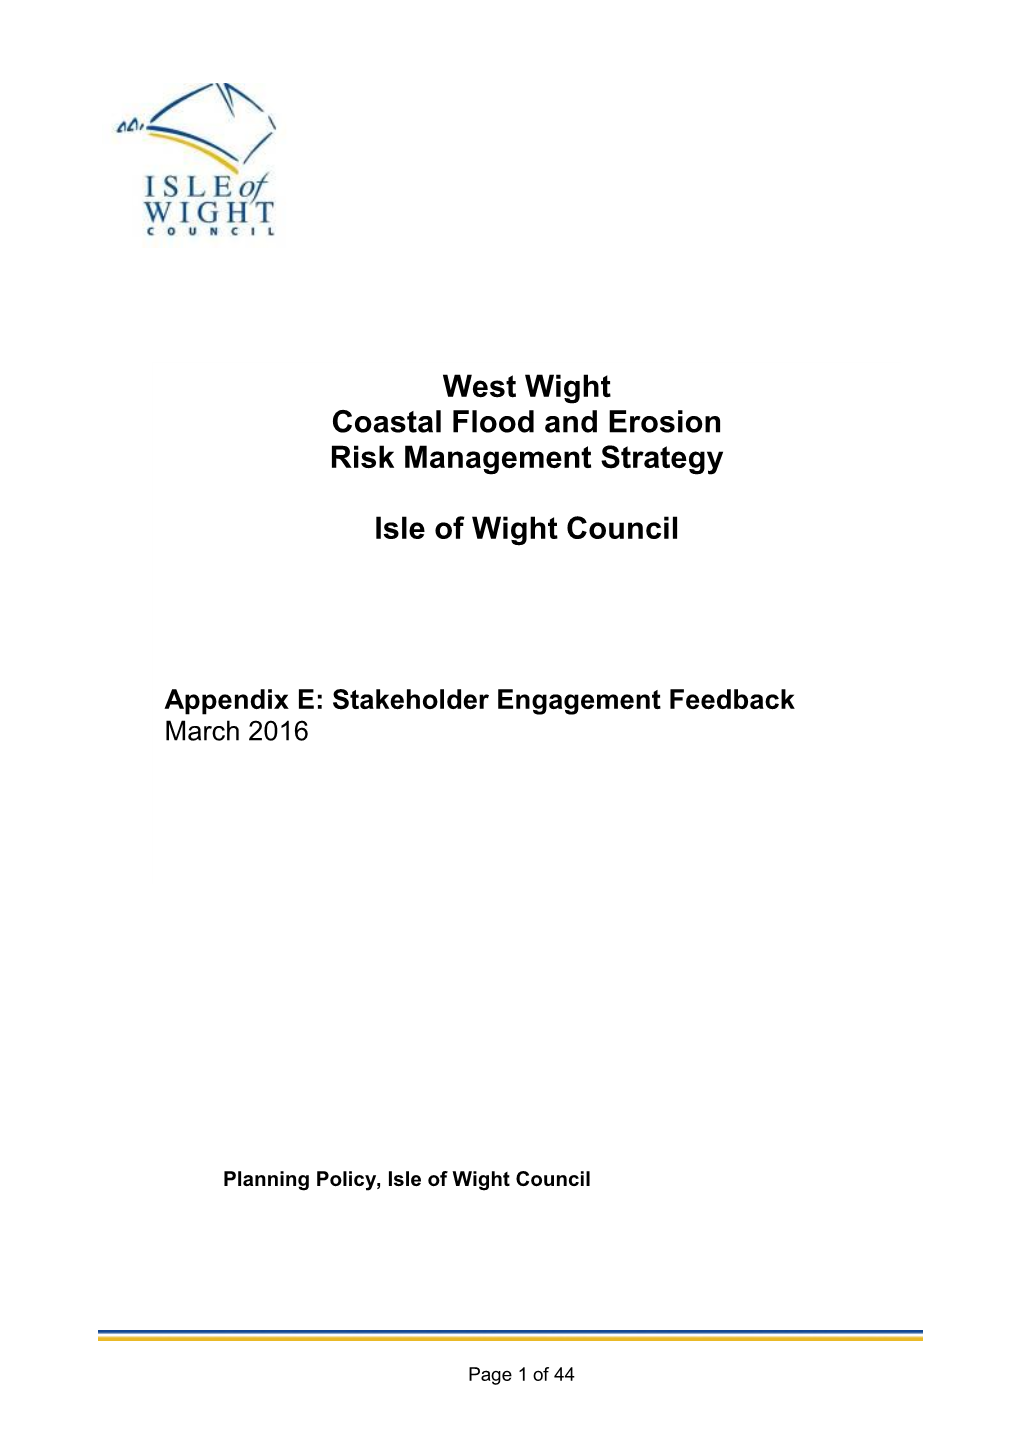 West Wight Coastal Flood and Erosion Risk Management Strategy Isle Of